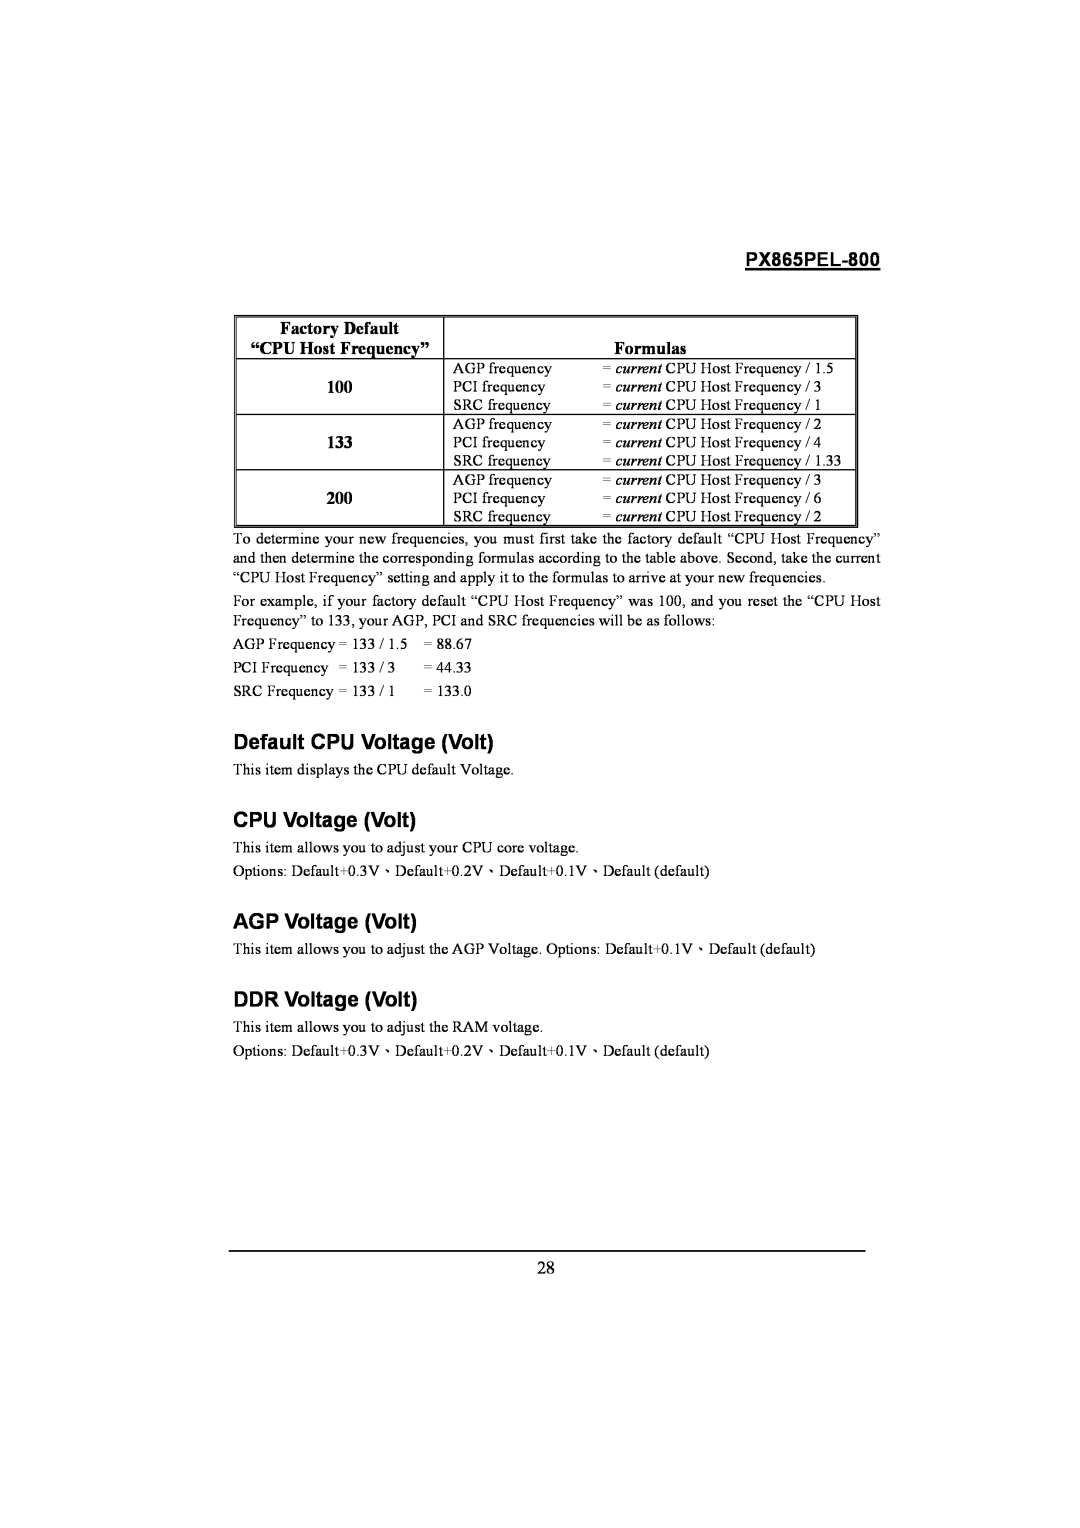 Intel PX865PEL-800 Default CPU Voltage Volt, AGP Voltage Volt, DDR Voltage Volt, Factory Default, “CPU Host Frequency” 